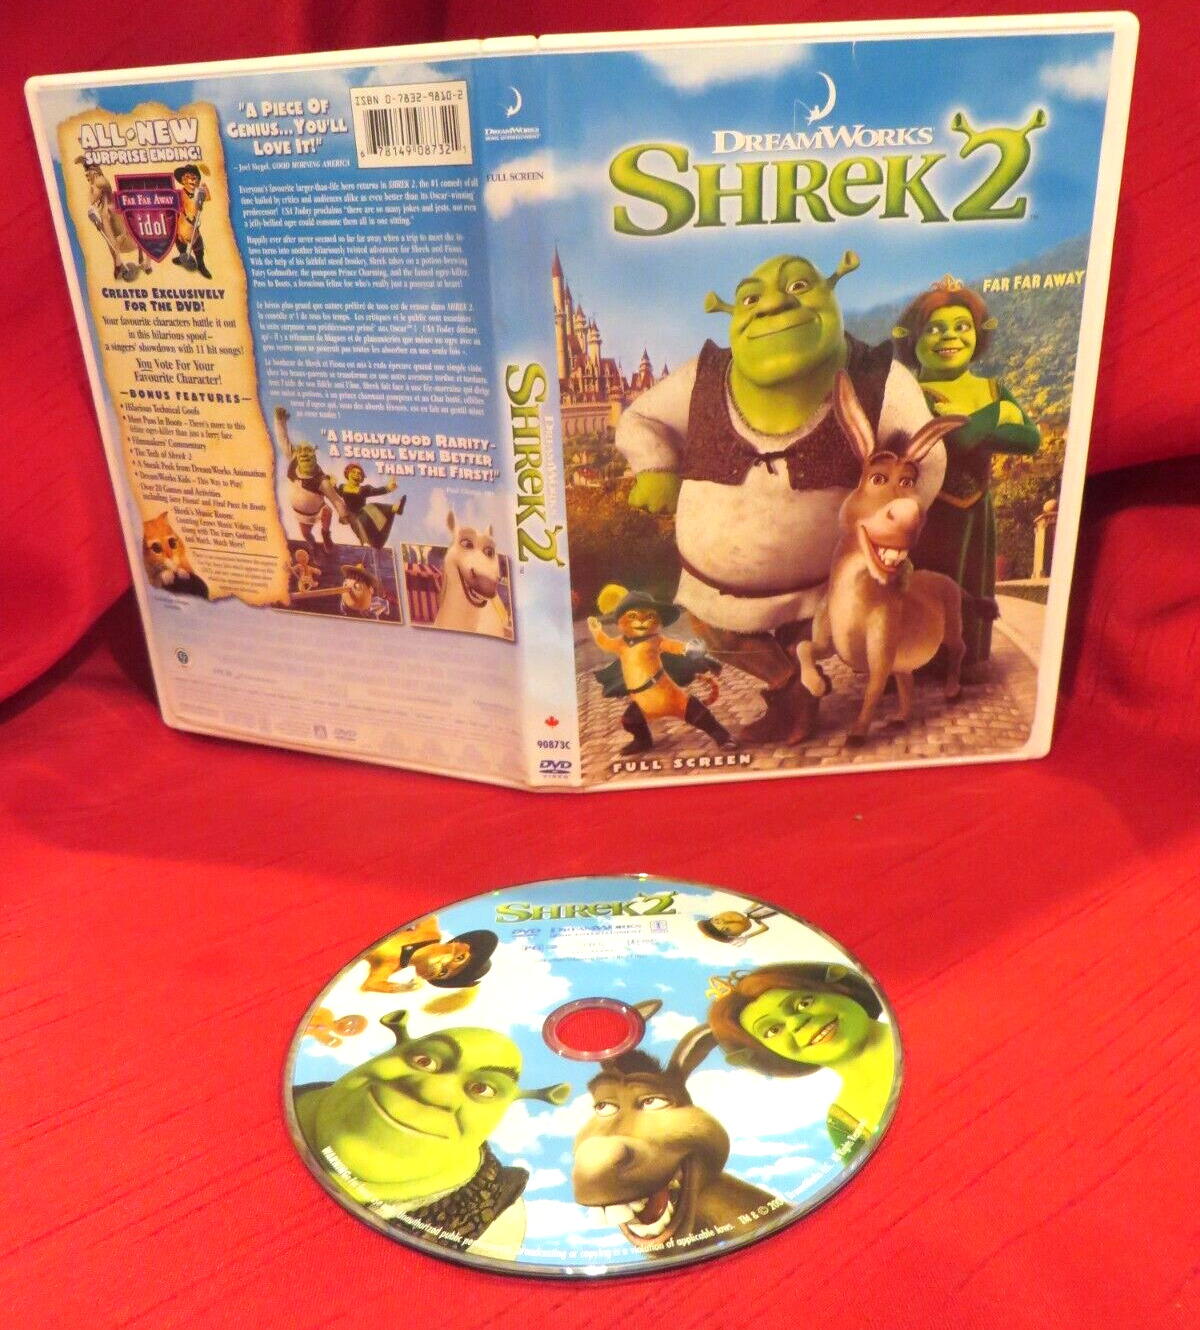 Shrek 2 (DVD, 2004, Full Frame, Version française incluse) Julie Andrews